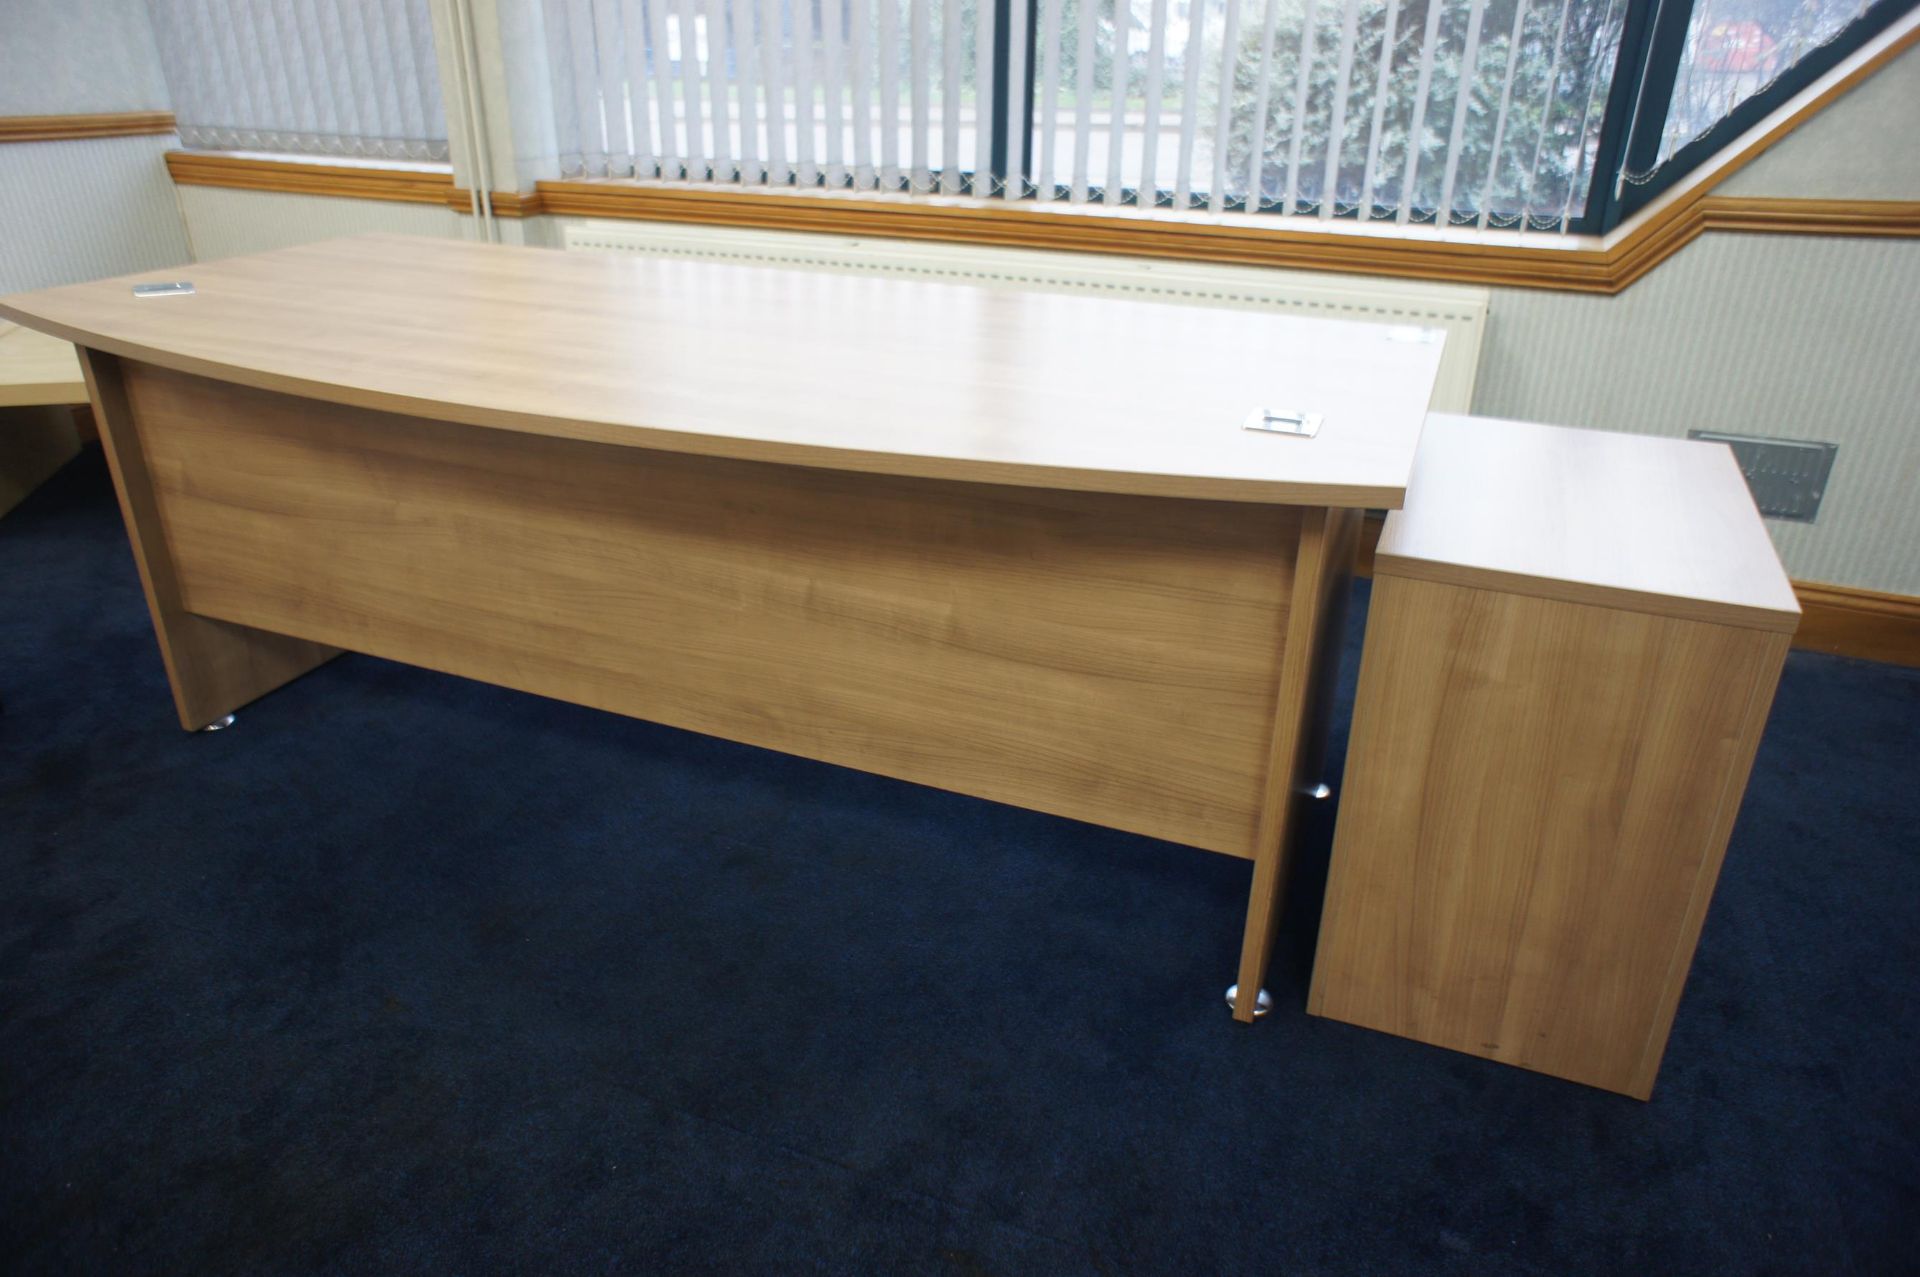 Teak Effect Radius Front Office Desk 2m x 0.9m with matching 3 Drawer Pedestal